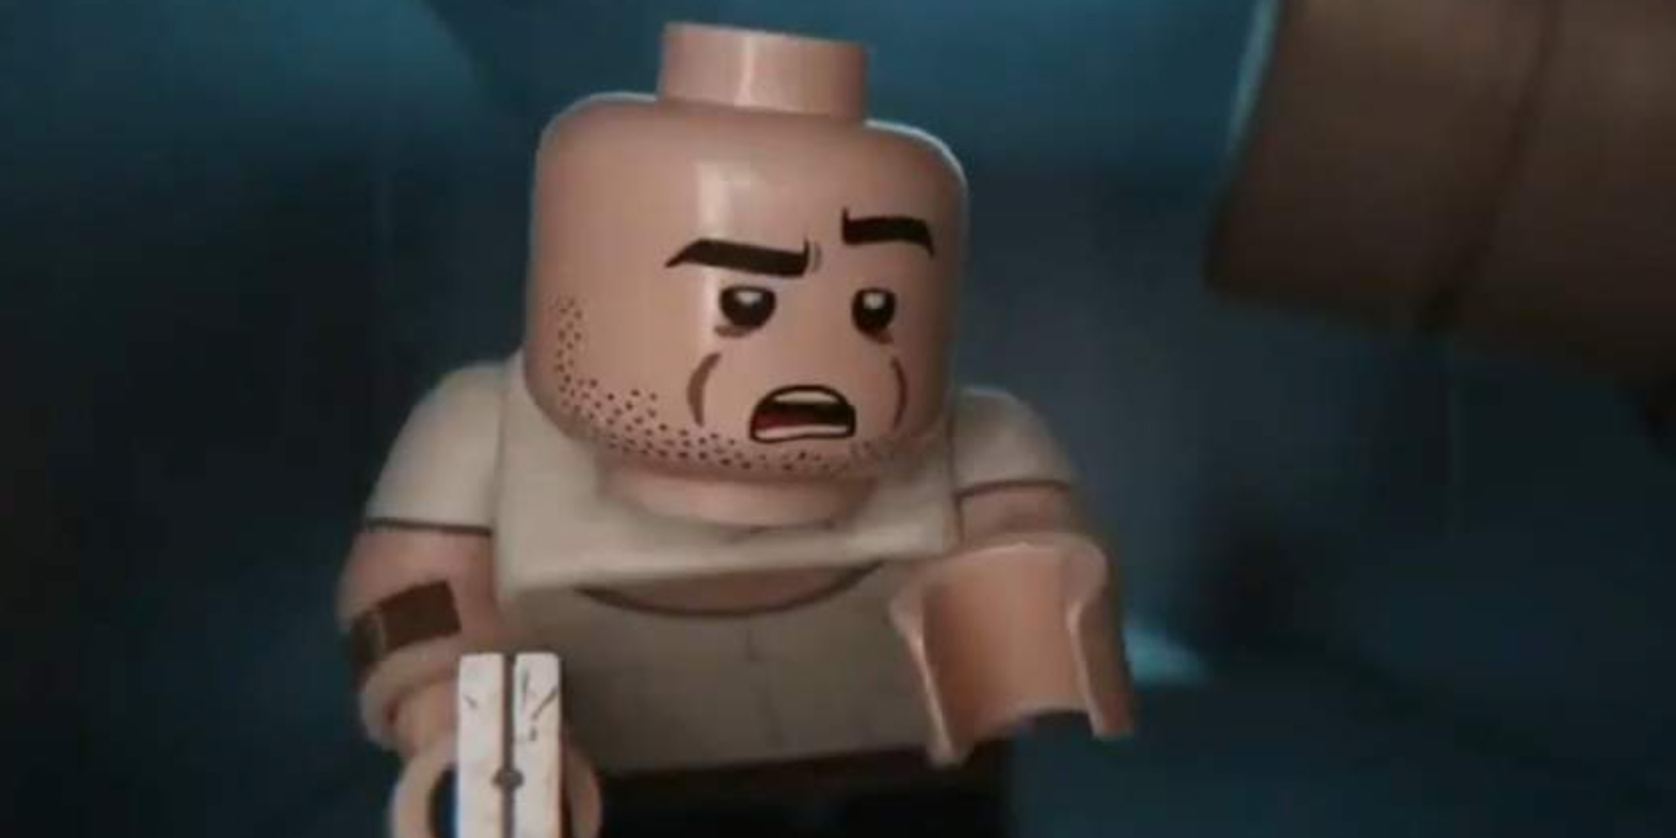 Lego movie Die Hard